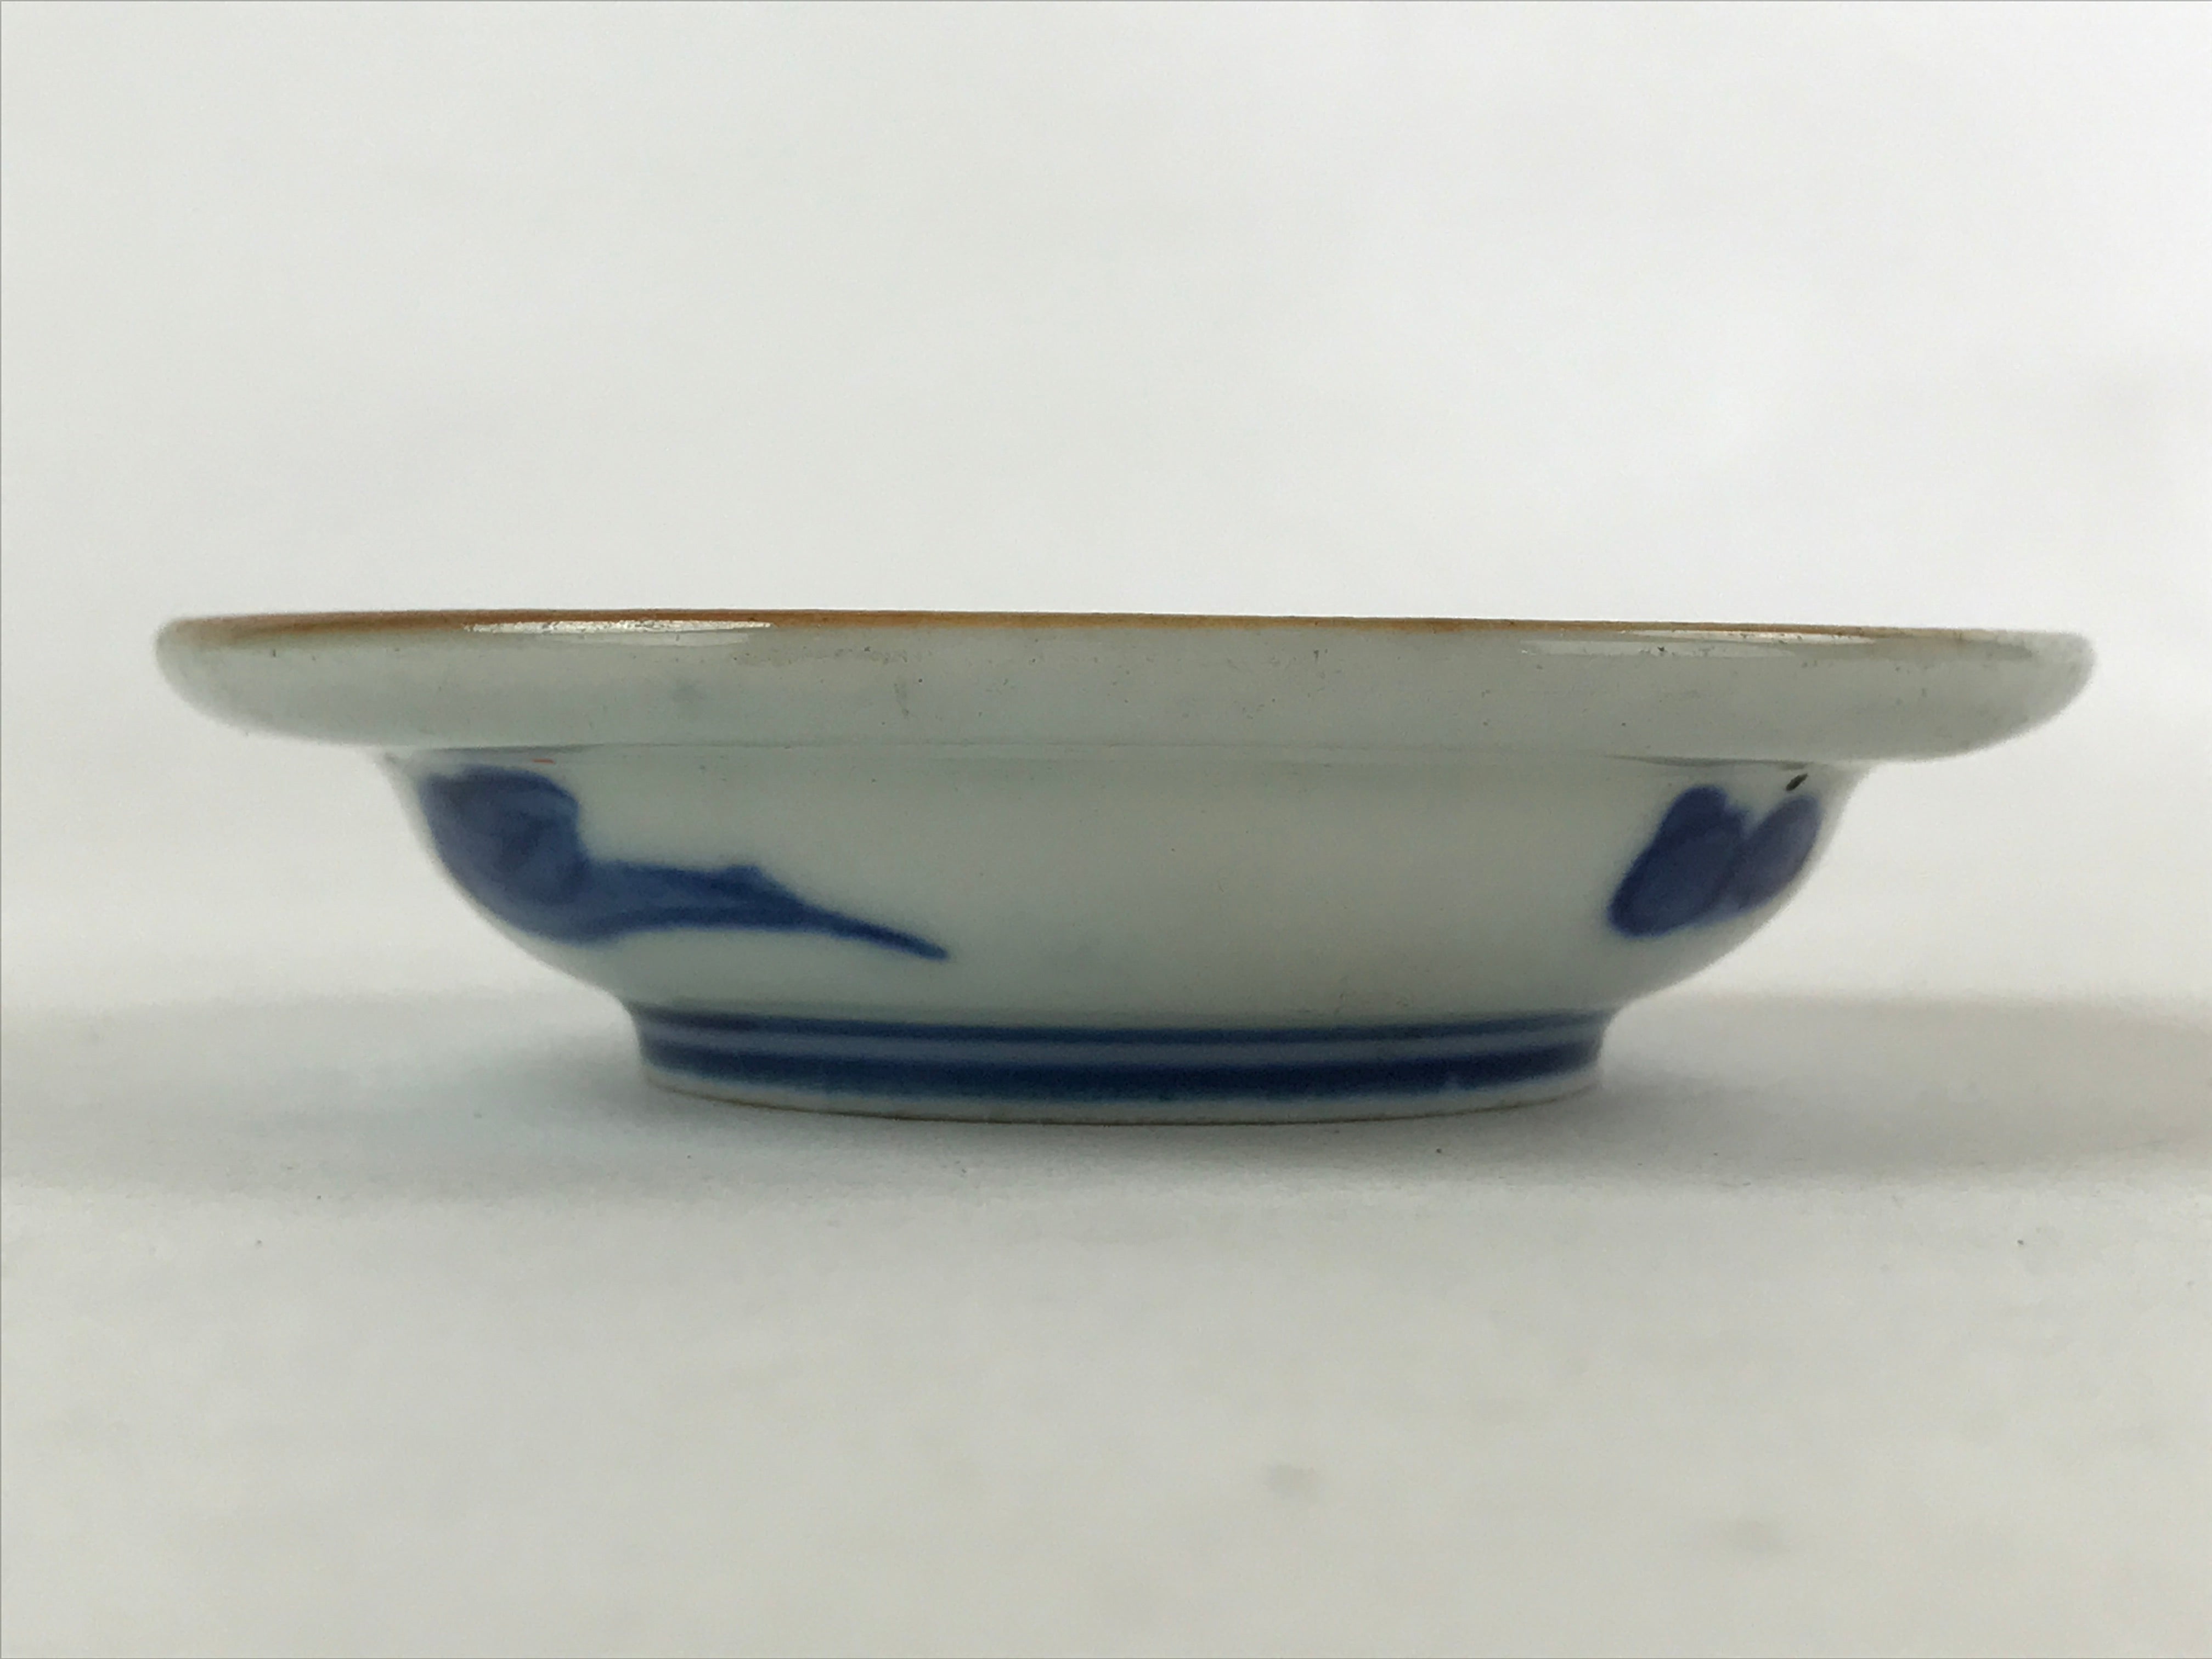 Japanese Ceramic Small Plate Vtg White Blue Sometsuke Landscape Pottery PY562